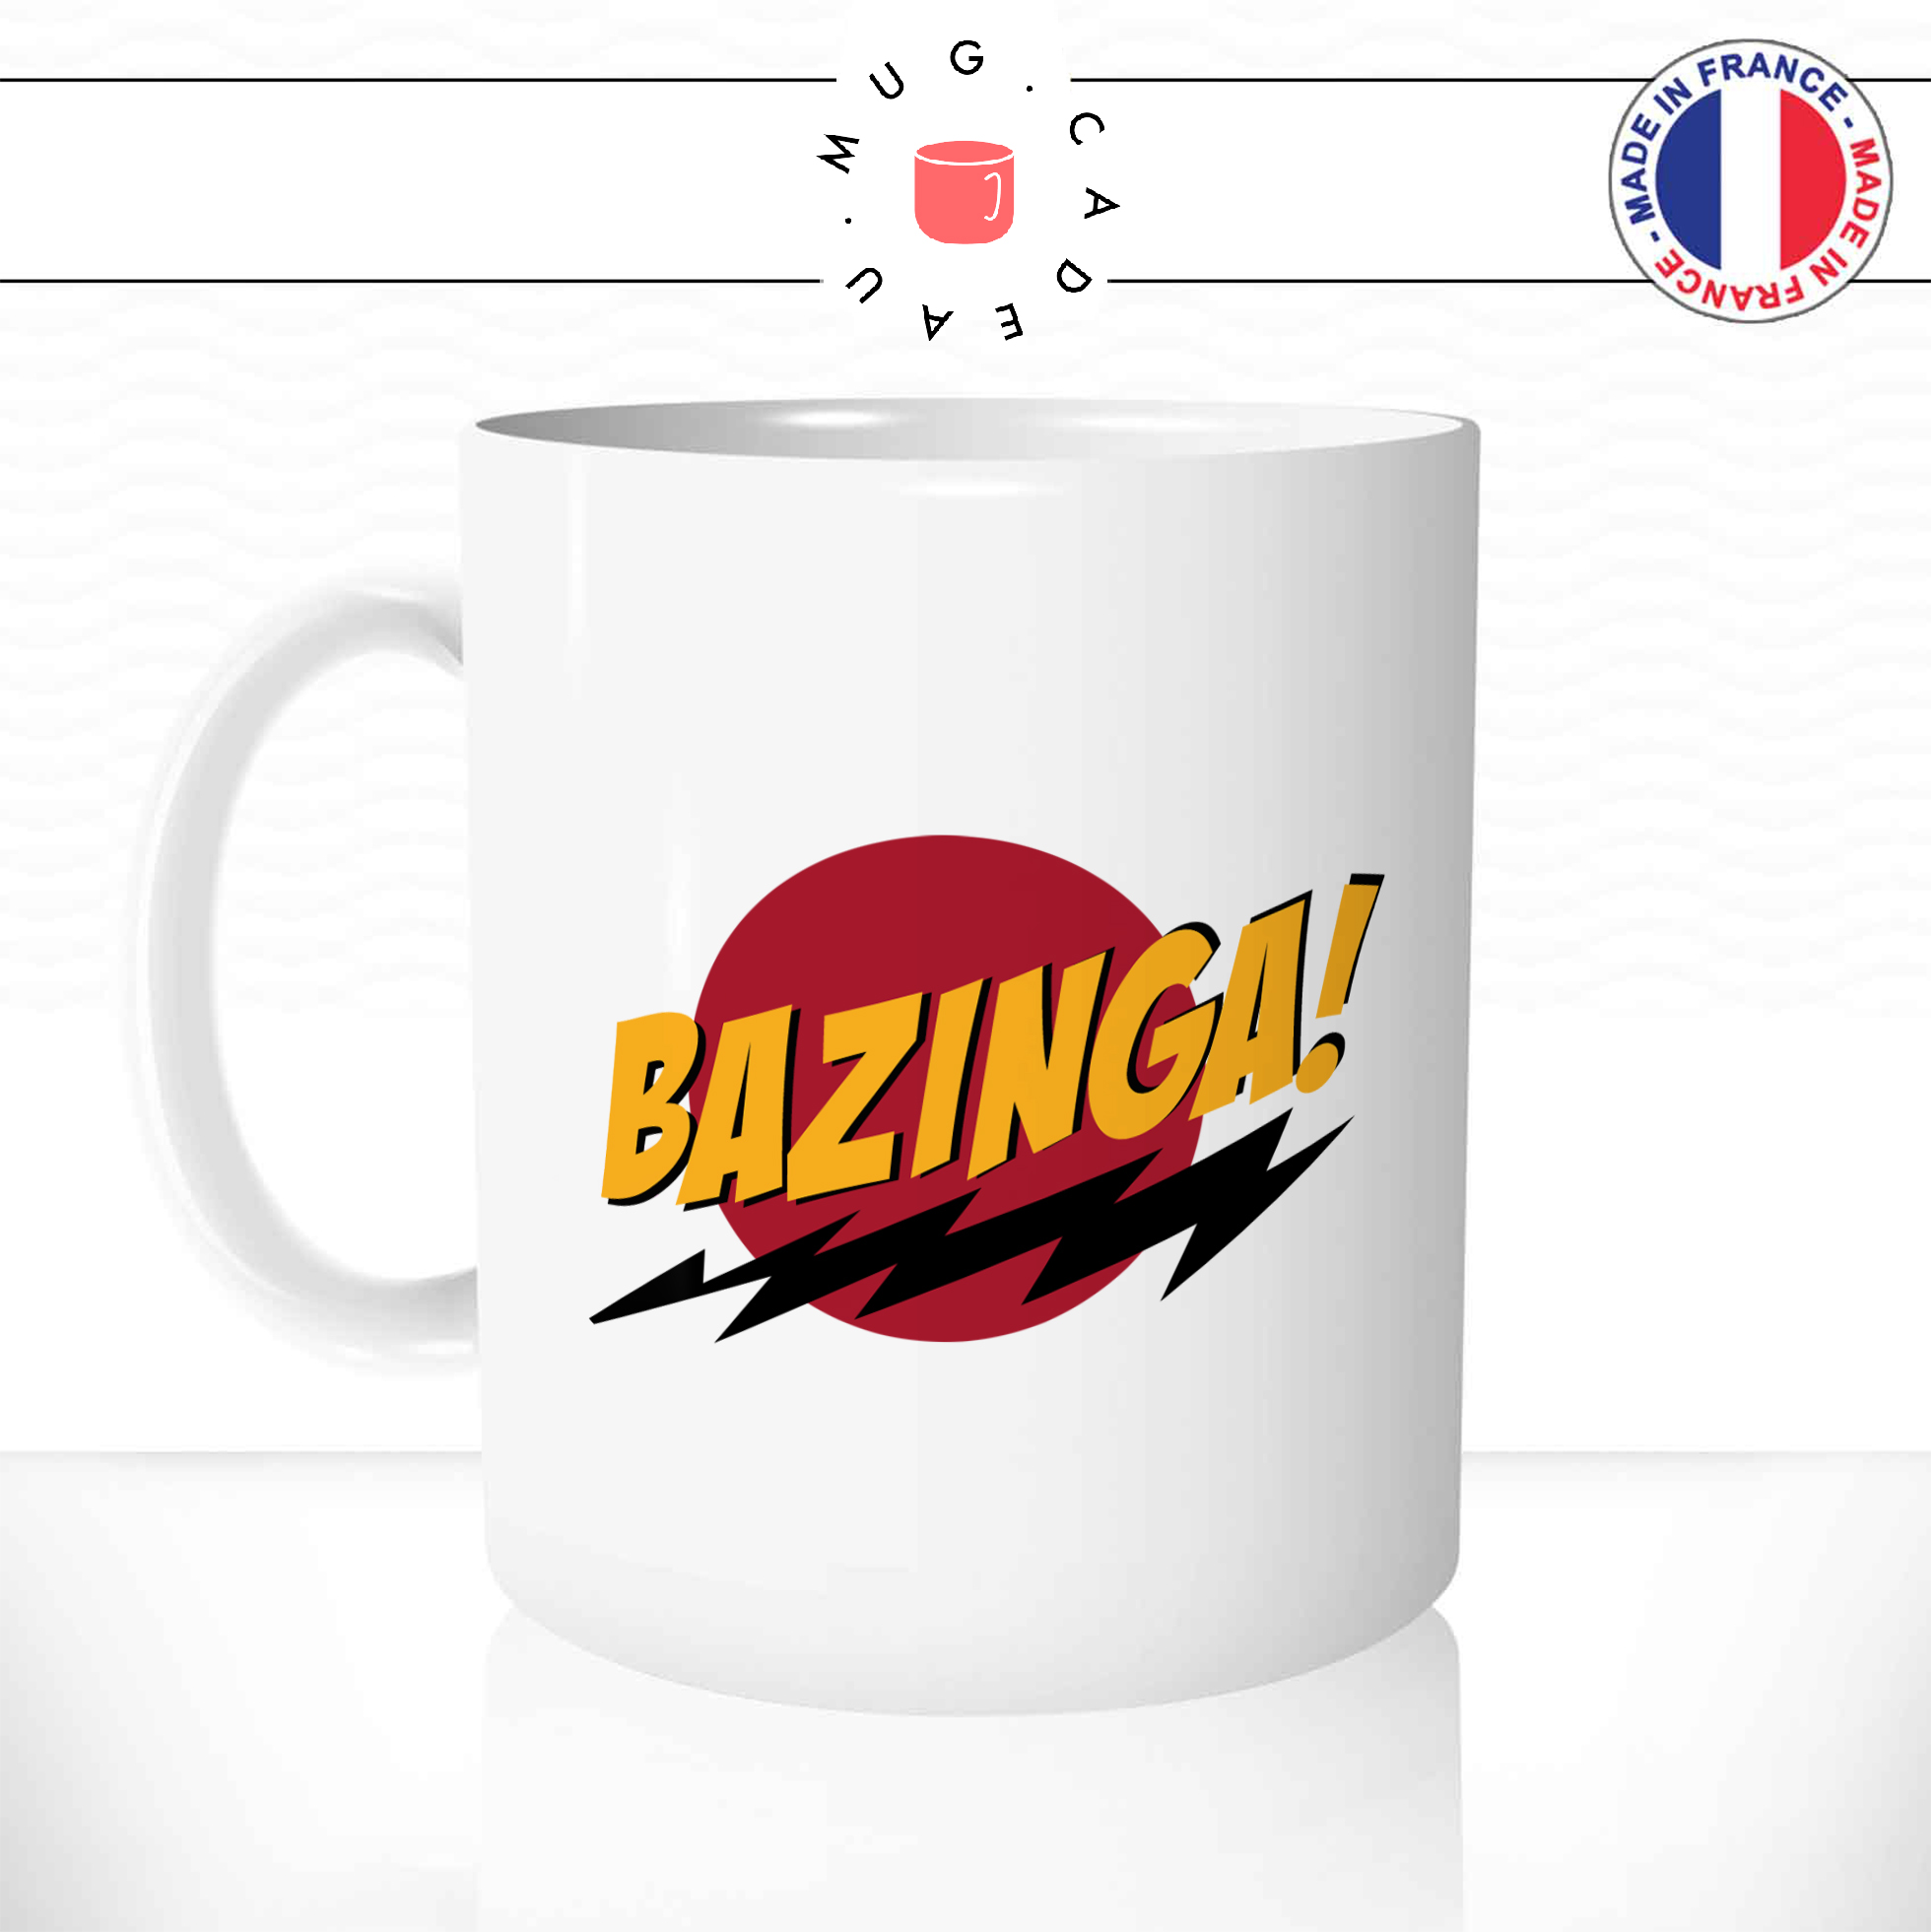 mug-tasse-ref3-big-bang-theorie-serie-bazinga-logo-cafe-the-mugs-tasses-personnalise-anse-gauche